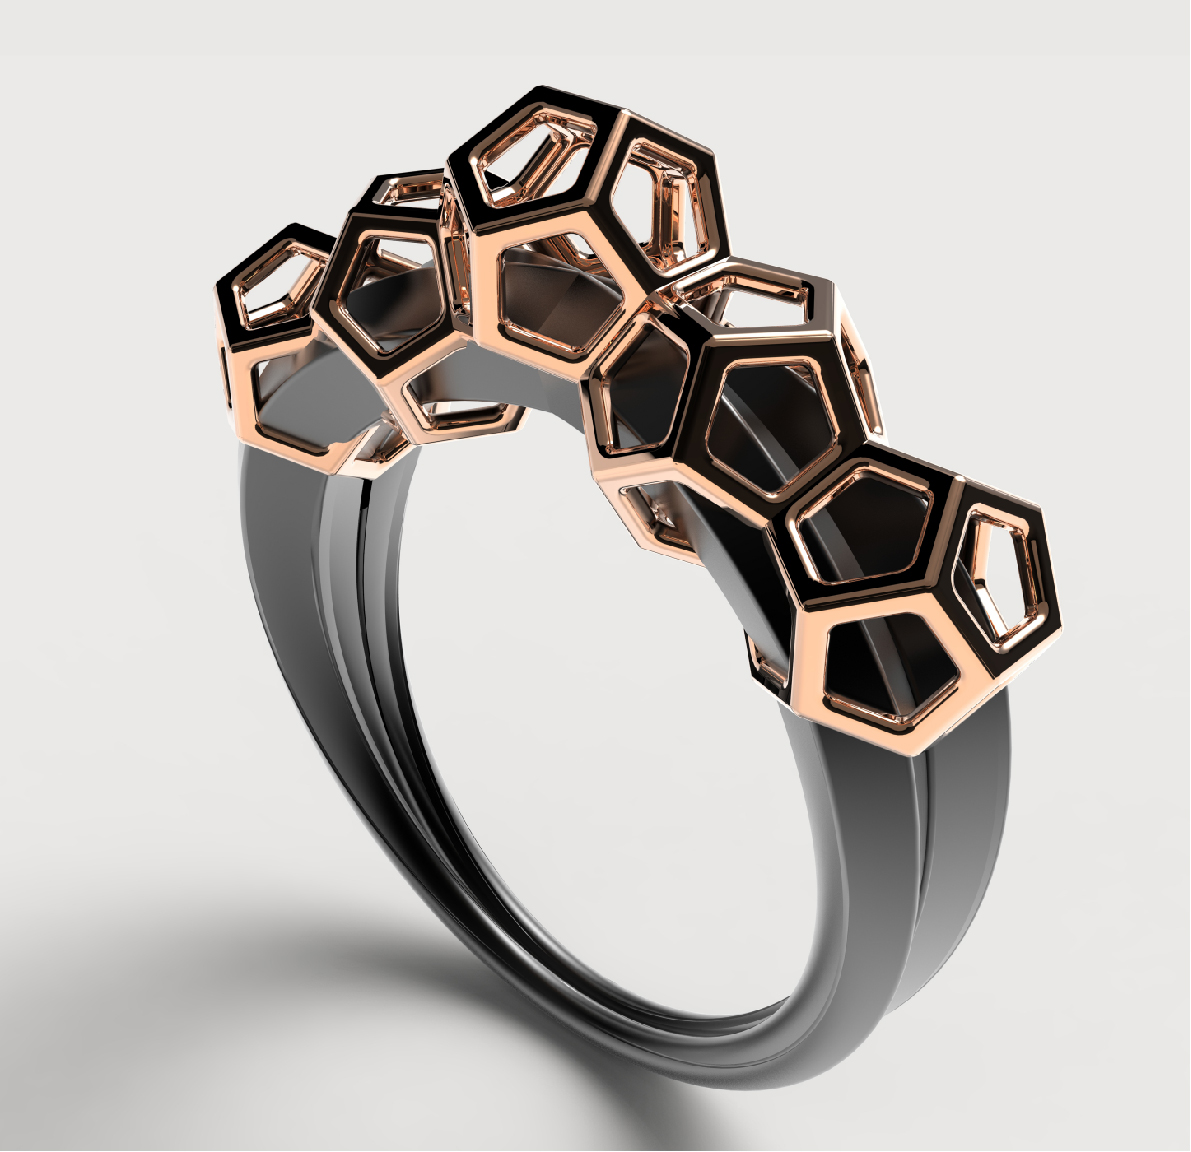 IYNO keyshot Rhino ring pendant mettalic geometric Polyhedron minimalist Rose Gold jewelry life Russia